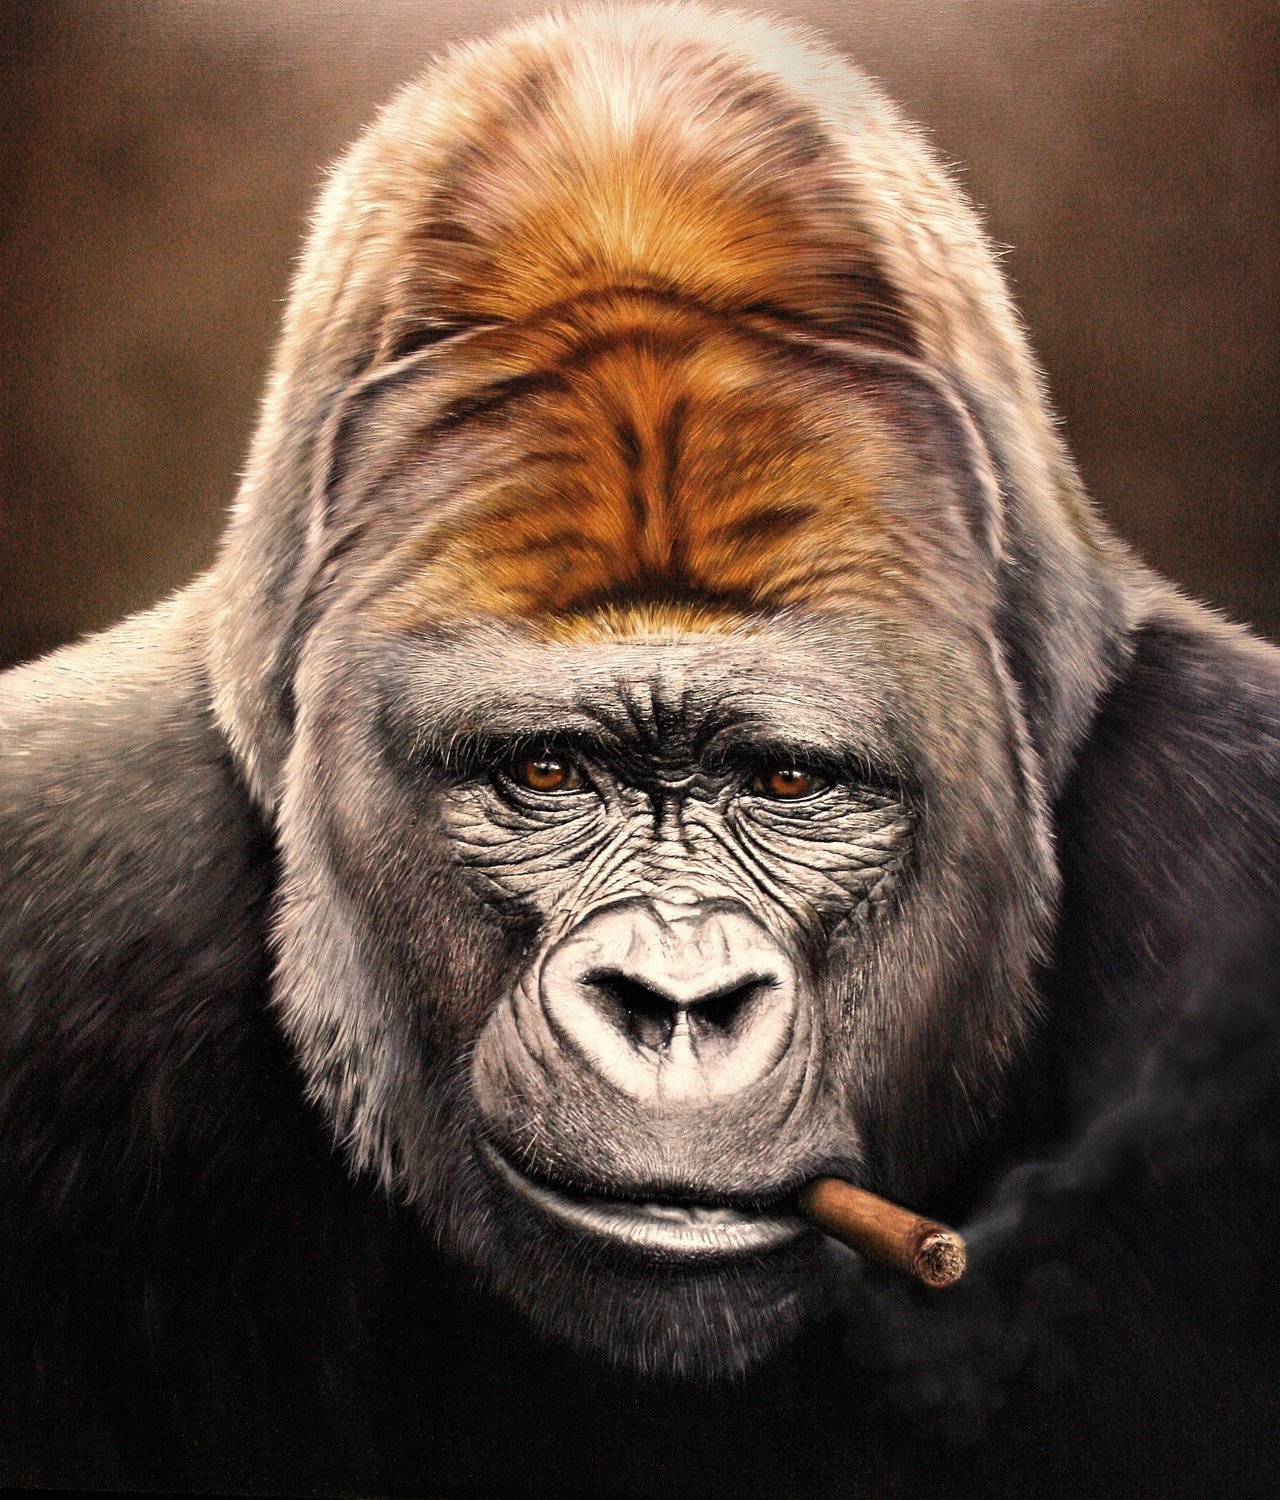 Animals Artwork Digital Art Gorillas Cigars Portrait Display Smoke Christiane Vleugels Photorealisti 1280x1500